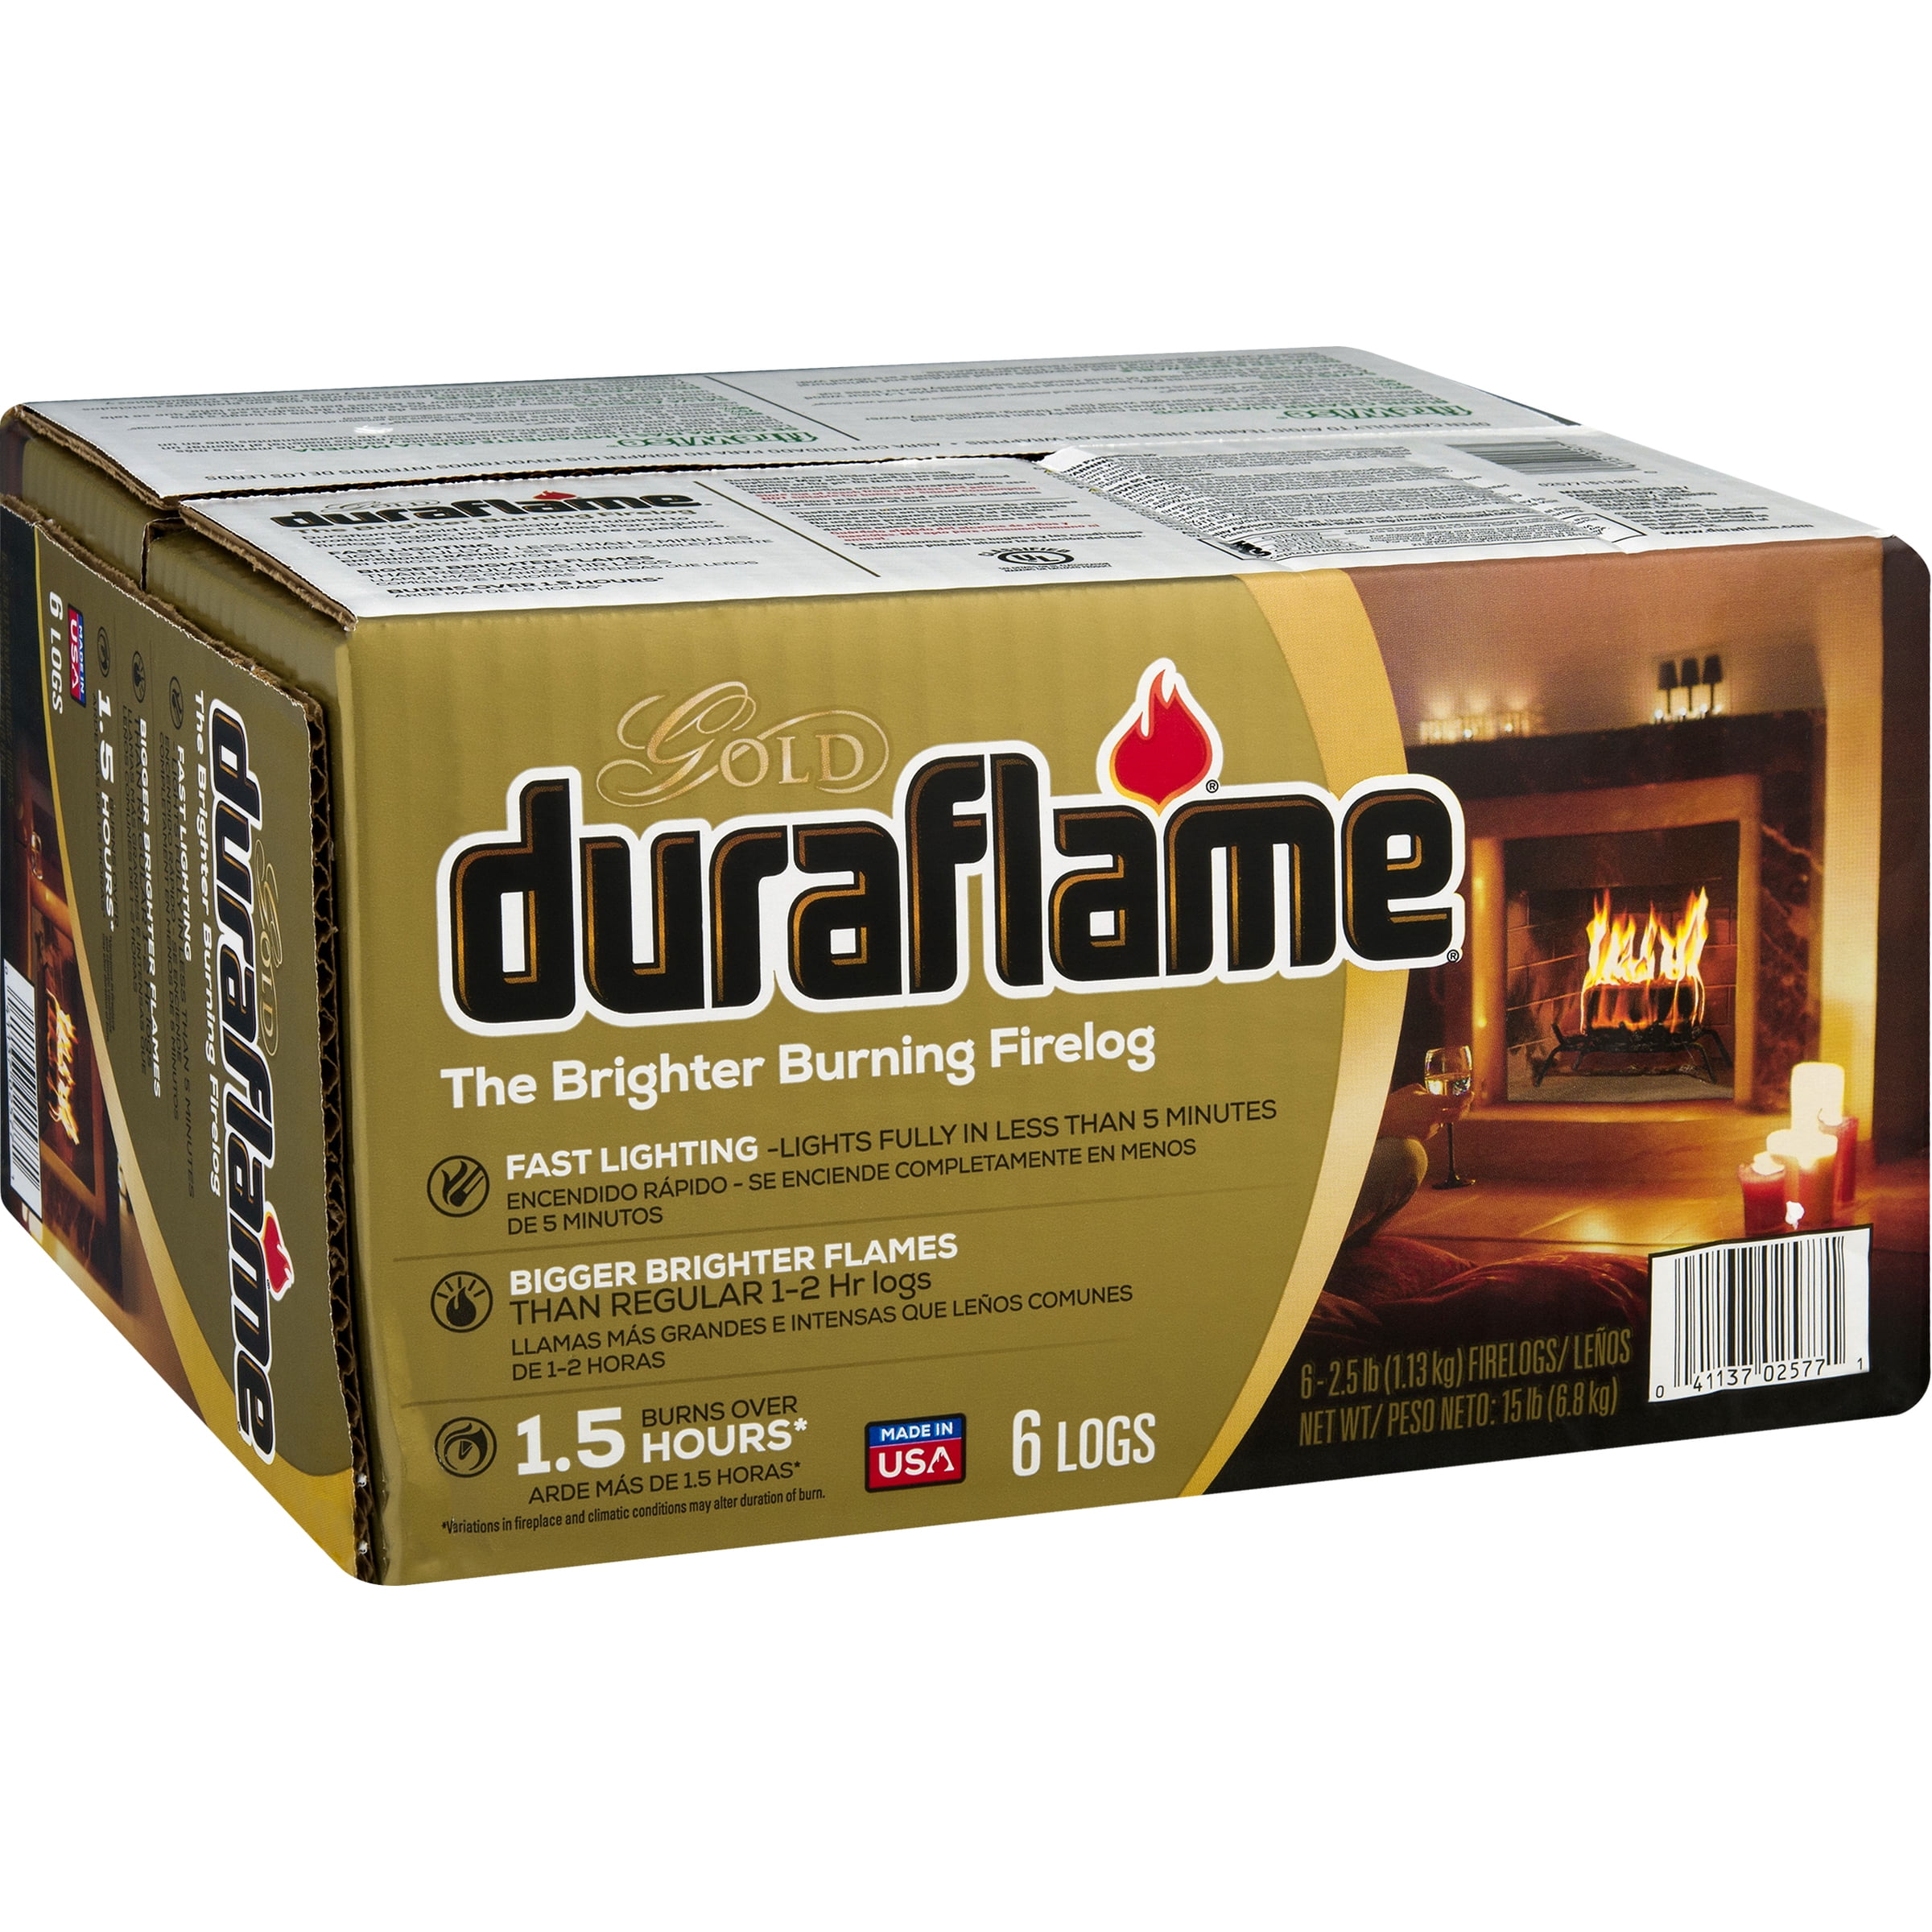 Duraflame Gold 2.5lb Firelogs, 6-Pack Case, Brighter 1.5 Hour Burn